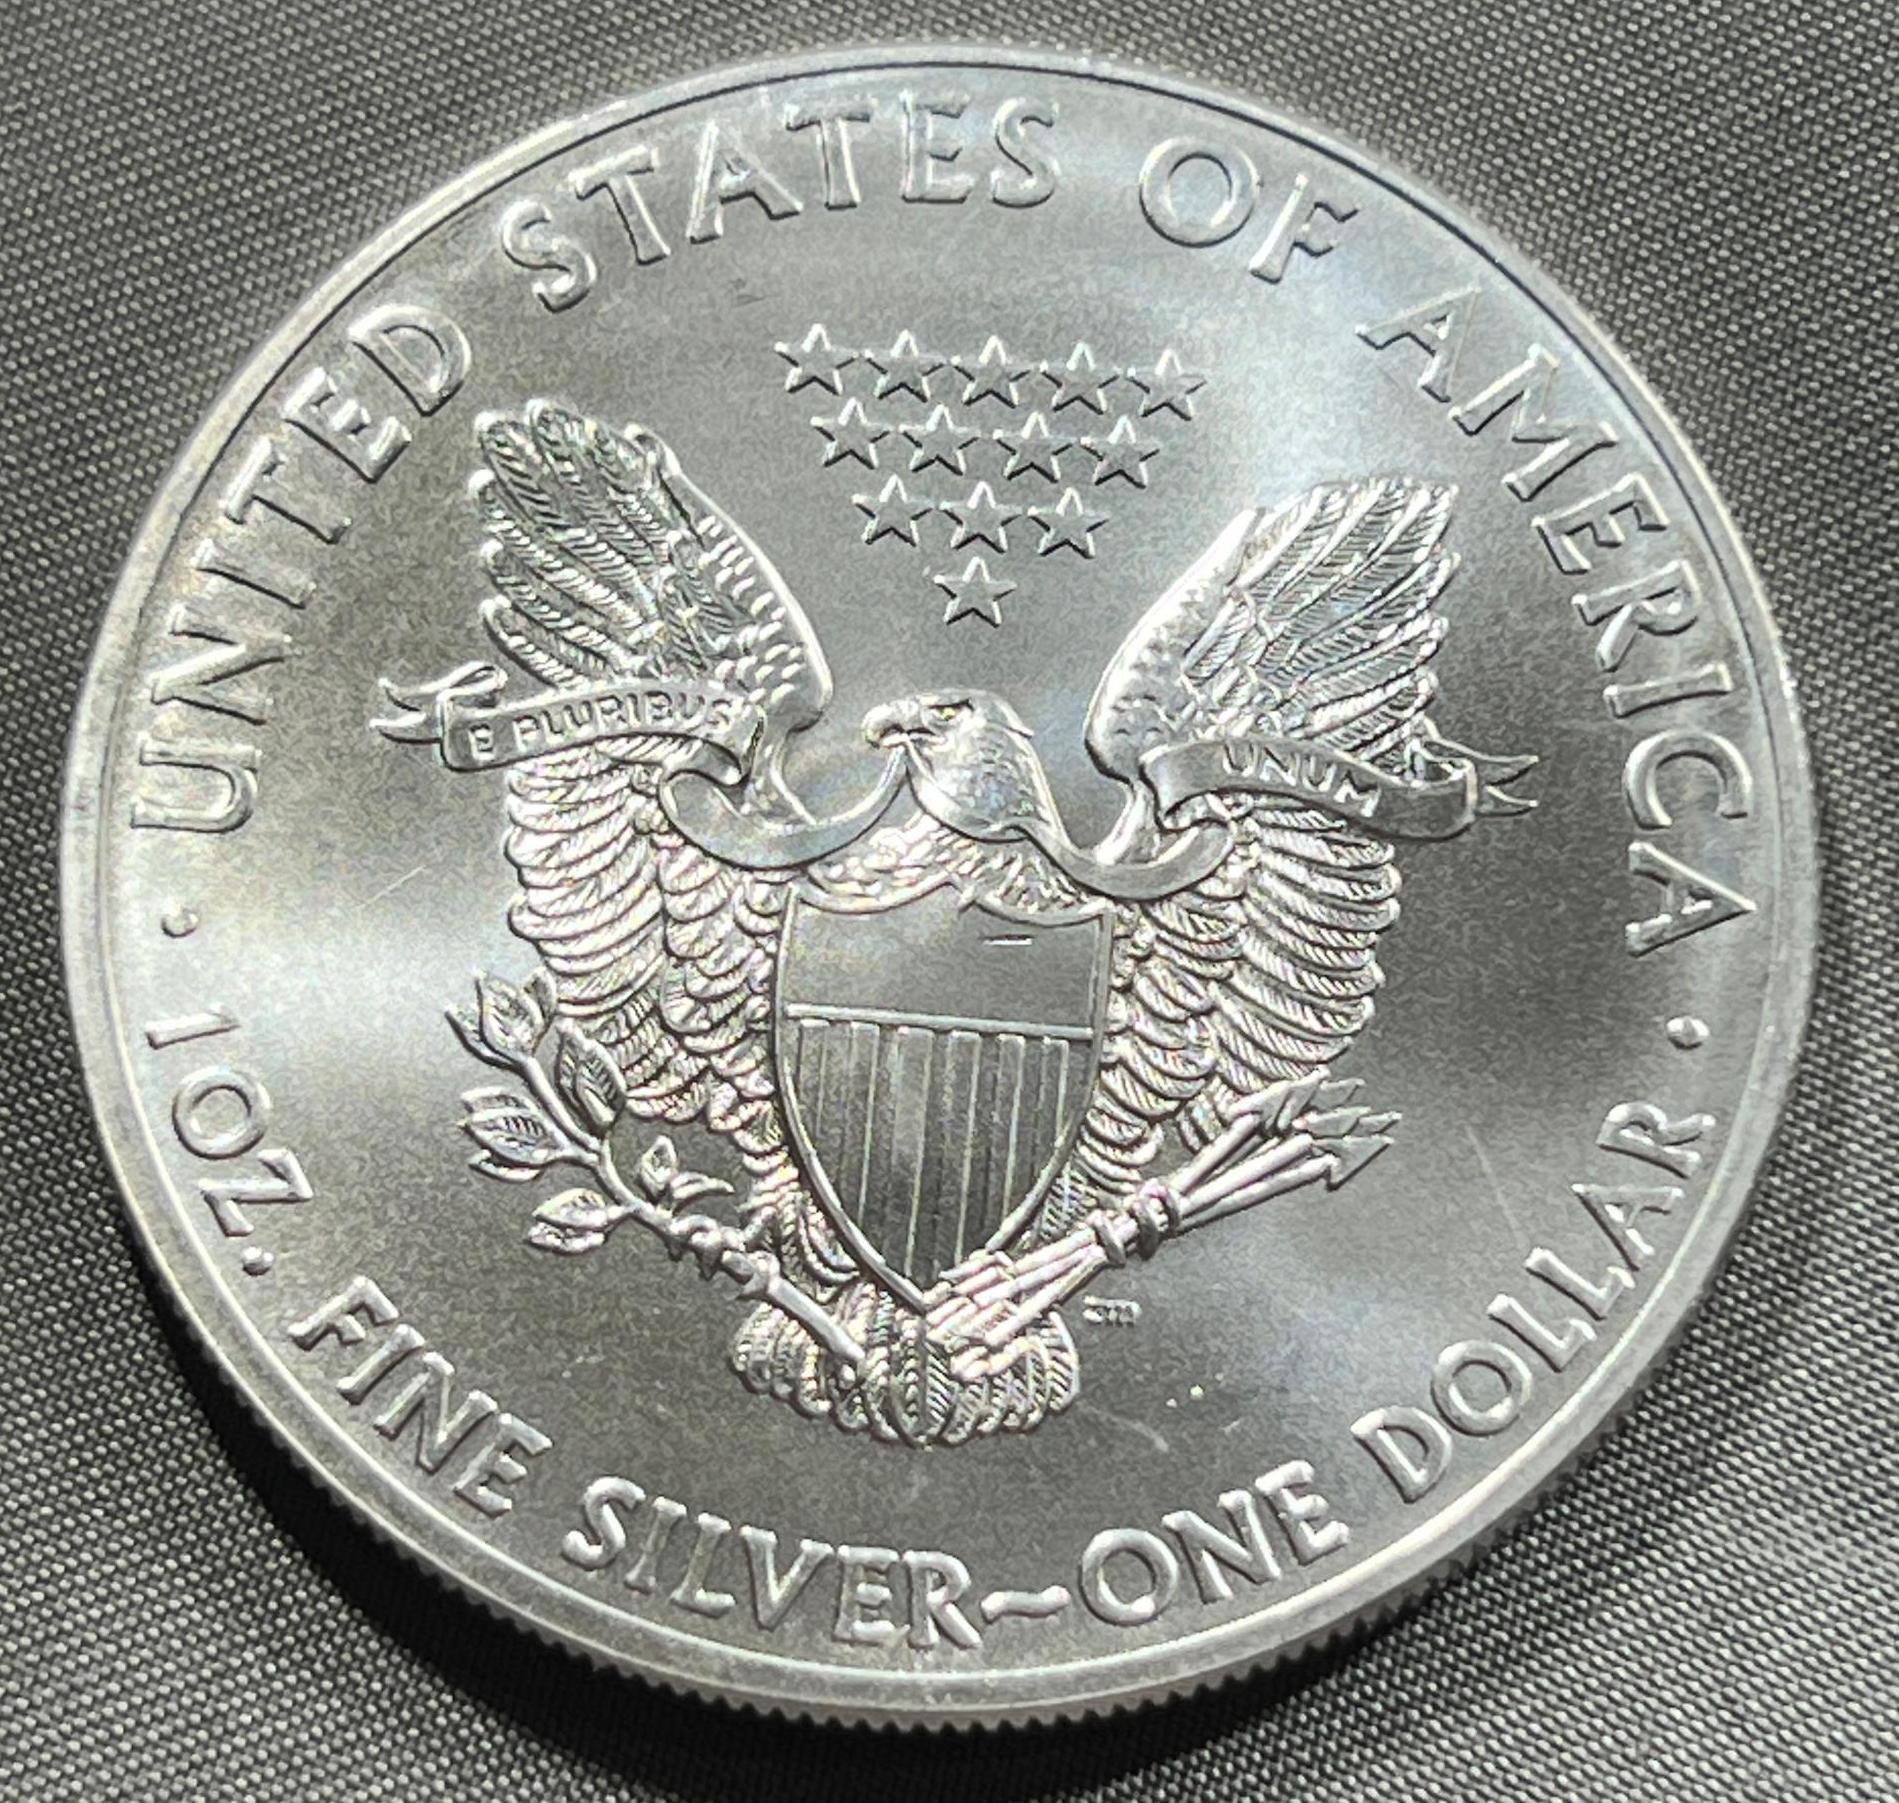 2015 US Silver Eagle Dollar Coin, .999 Fine Silver